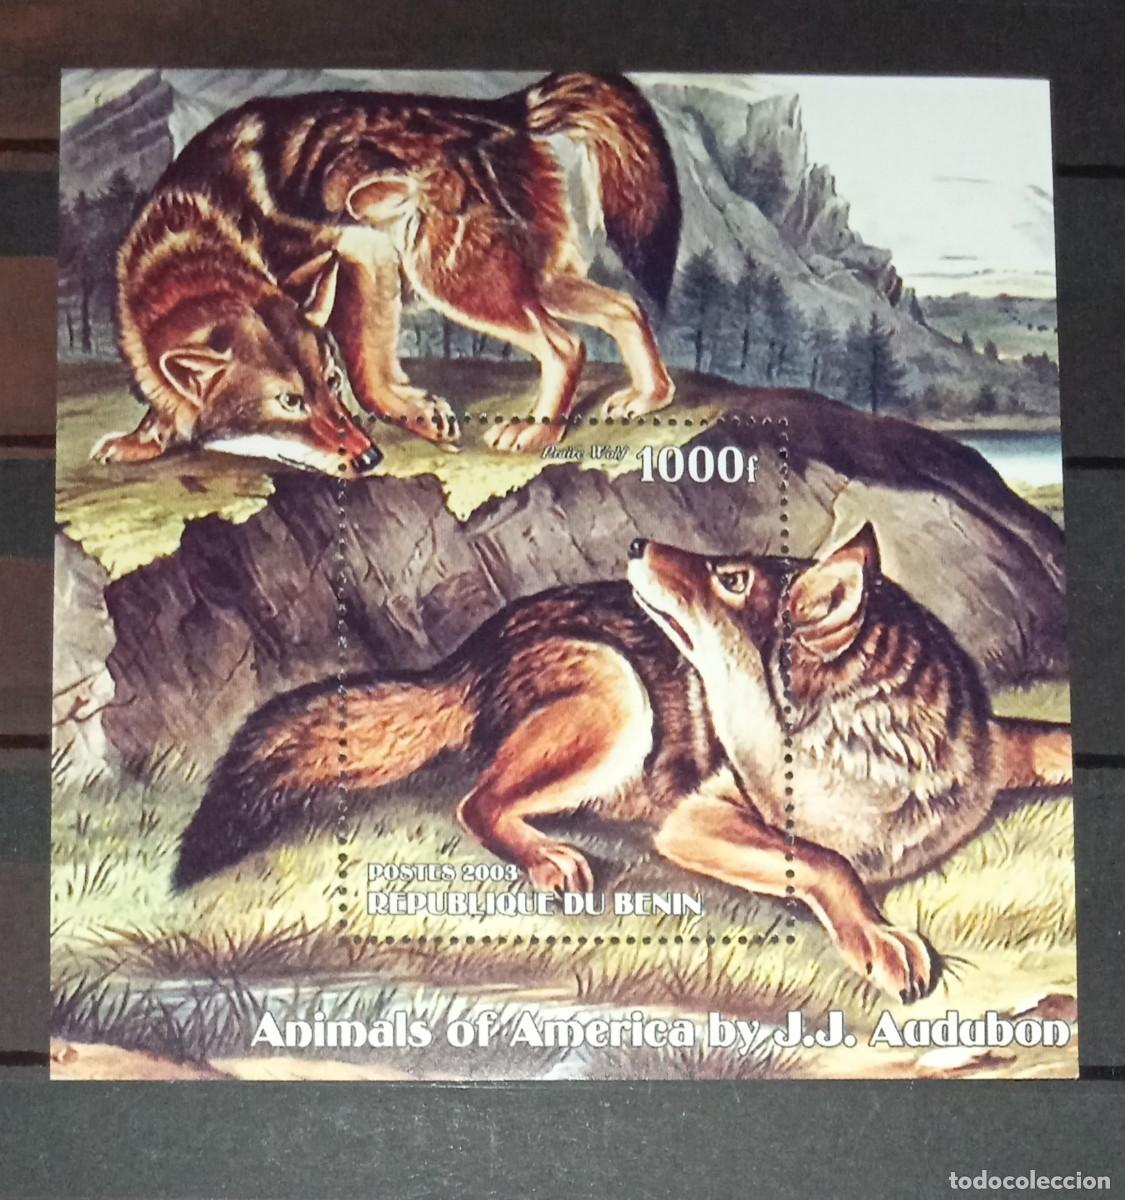 benin 2003 sheet mnh fauna mamiferos wolves wol - Compra venta en  todocoleccion